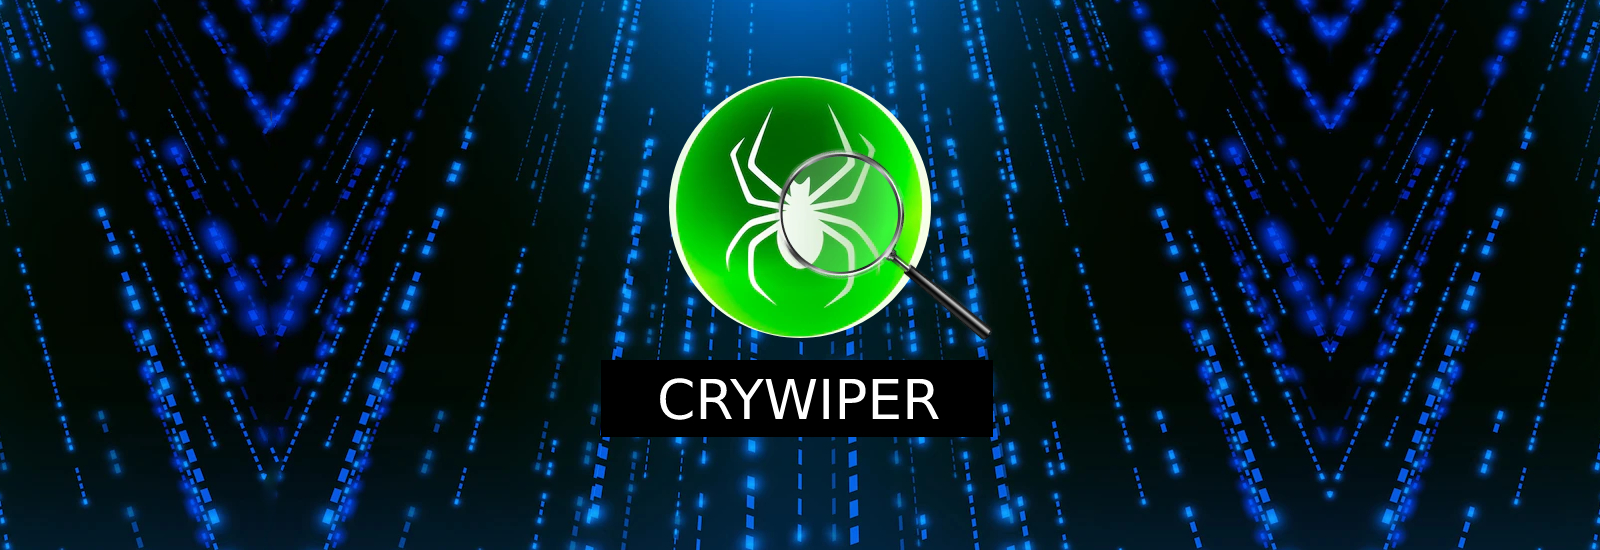 CryWiper چیست و راهکارهای مقابله با آن کدام است؟​